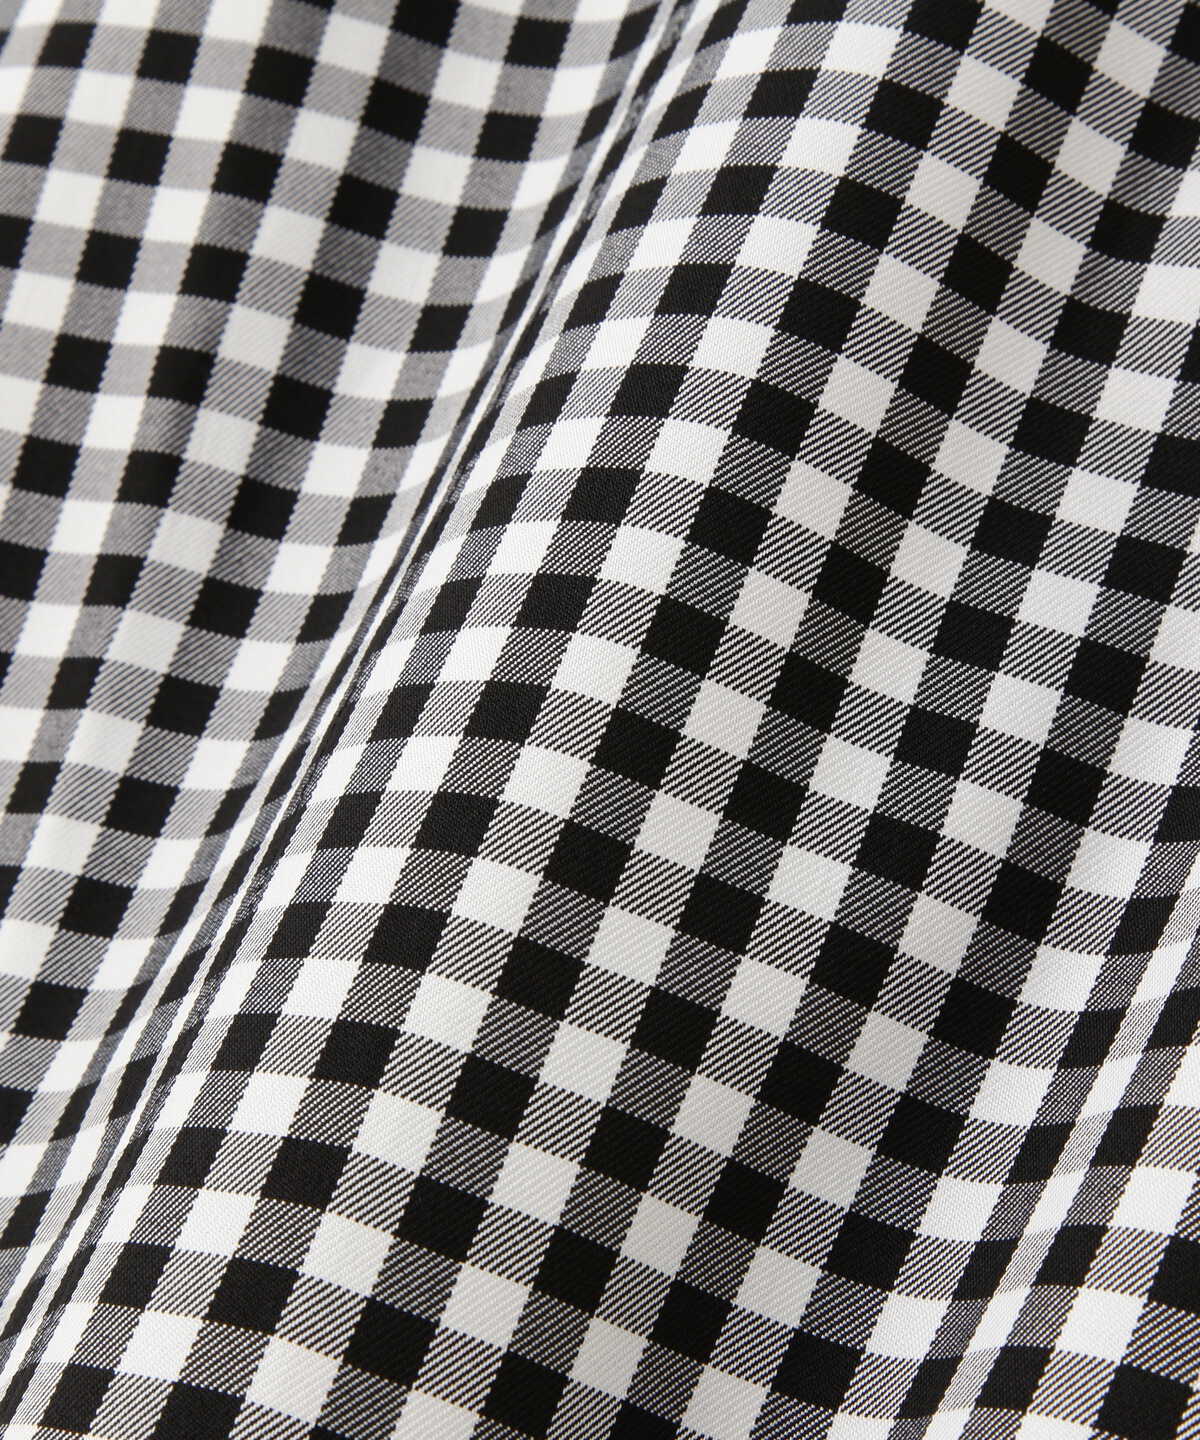 [Sシリーズ対応商品]ギャザーディティールフロントスリットナロースカート